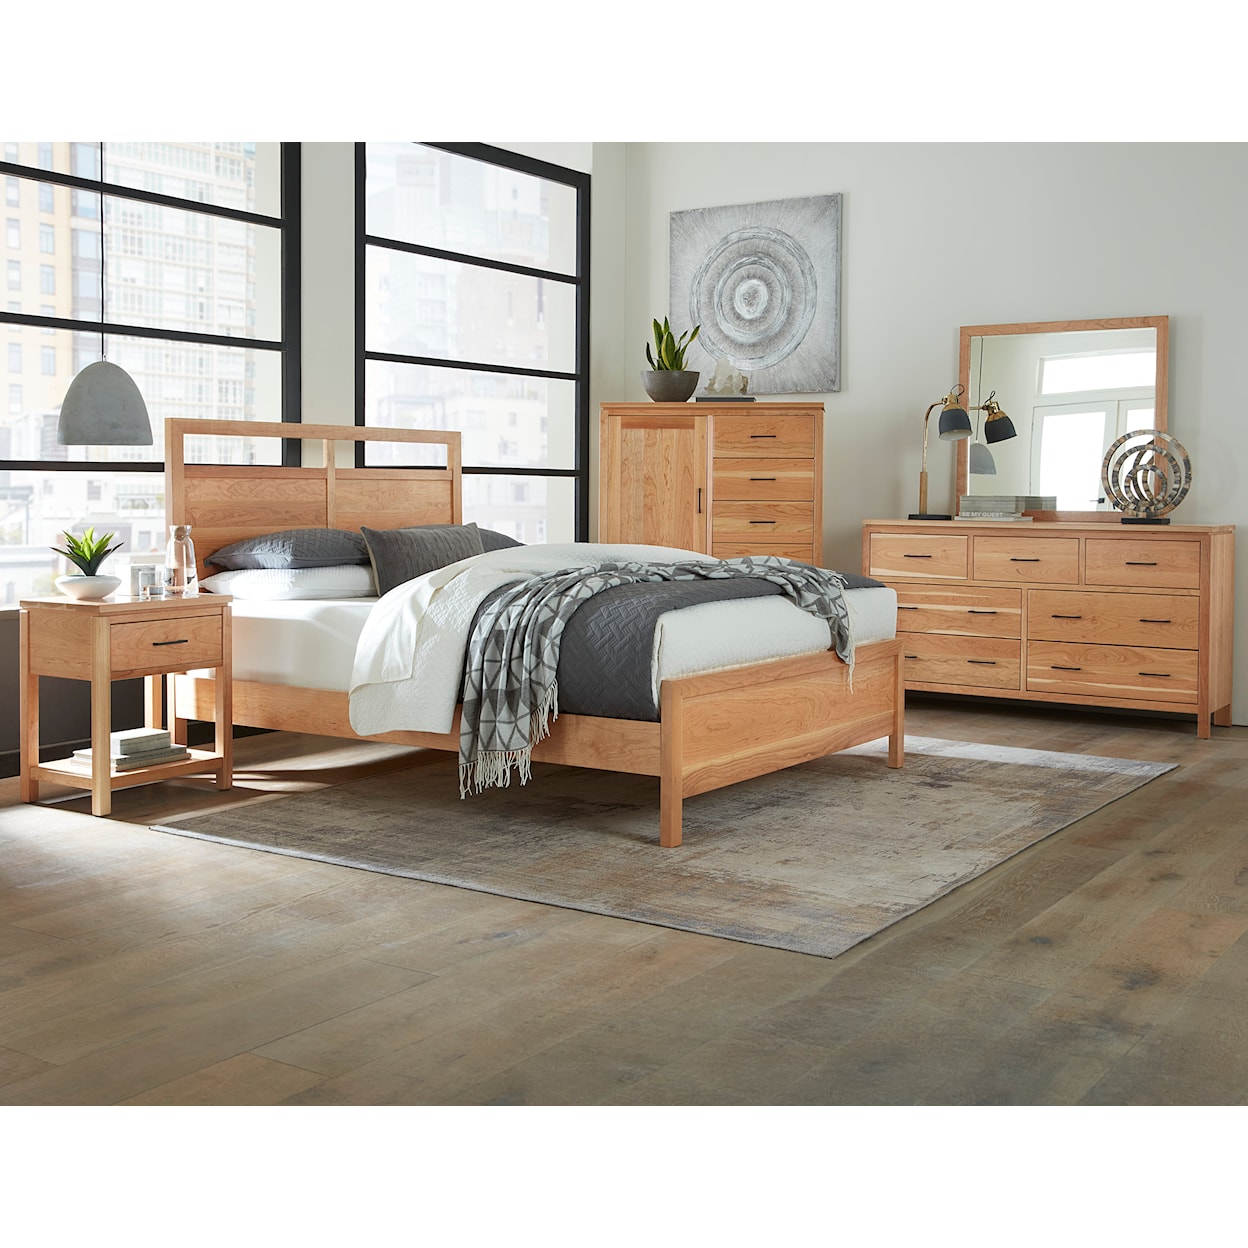 Archbold Furniture Maverick King 5-Piece Bedroom Set